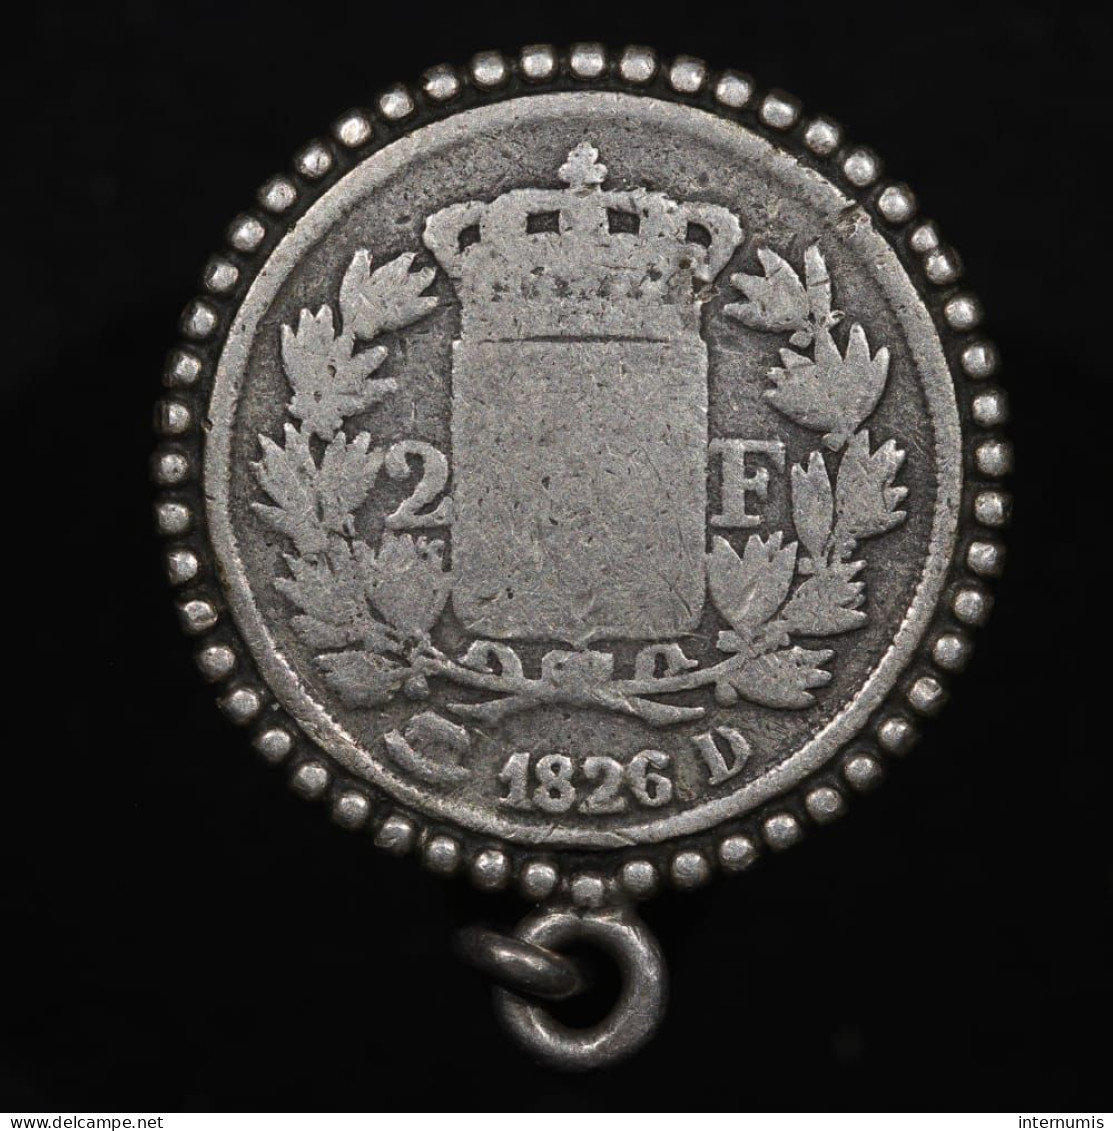 RARE - France, Charles X, 2 Francs, 1826, D - Lyon, Argent (Silver), KM#725.4, Gad.516, F.258/15 - 2 Francs